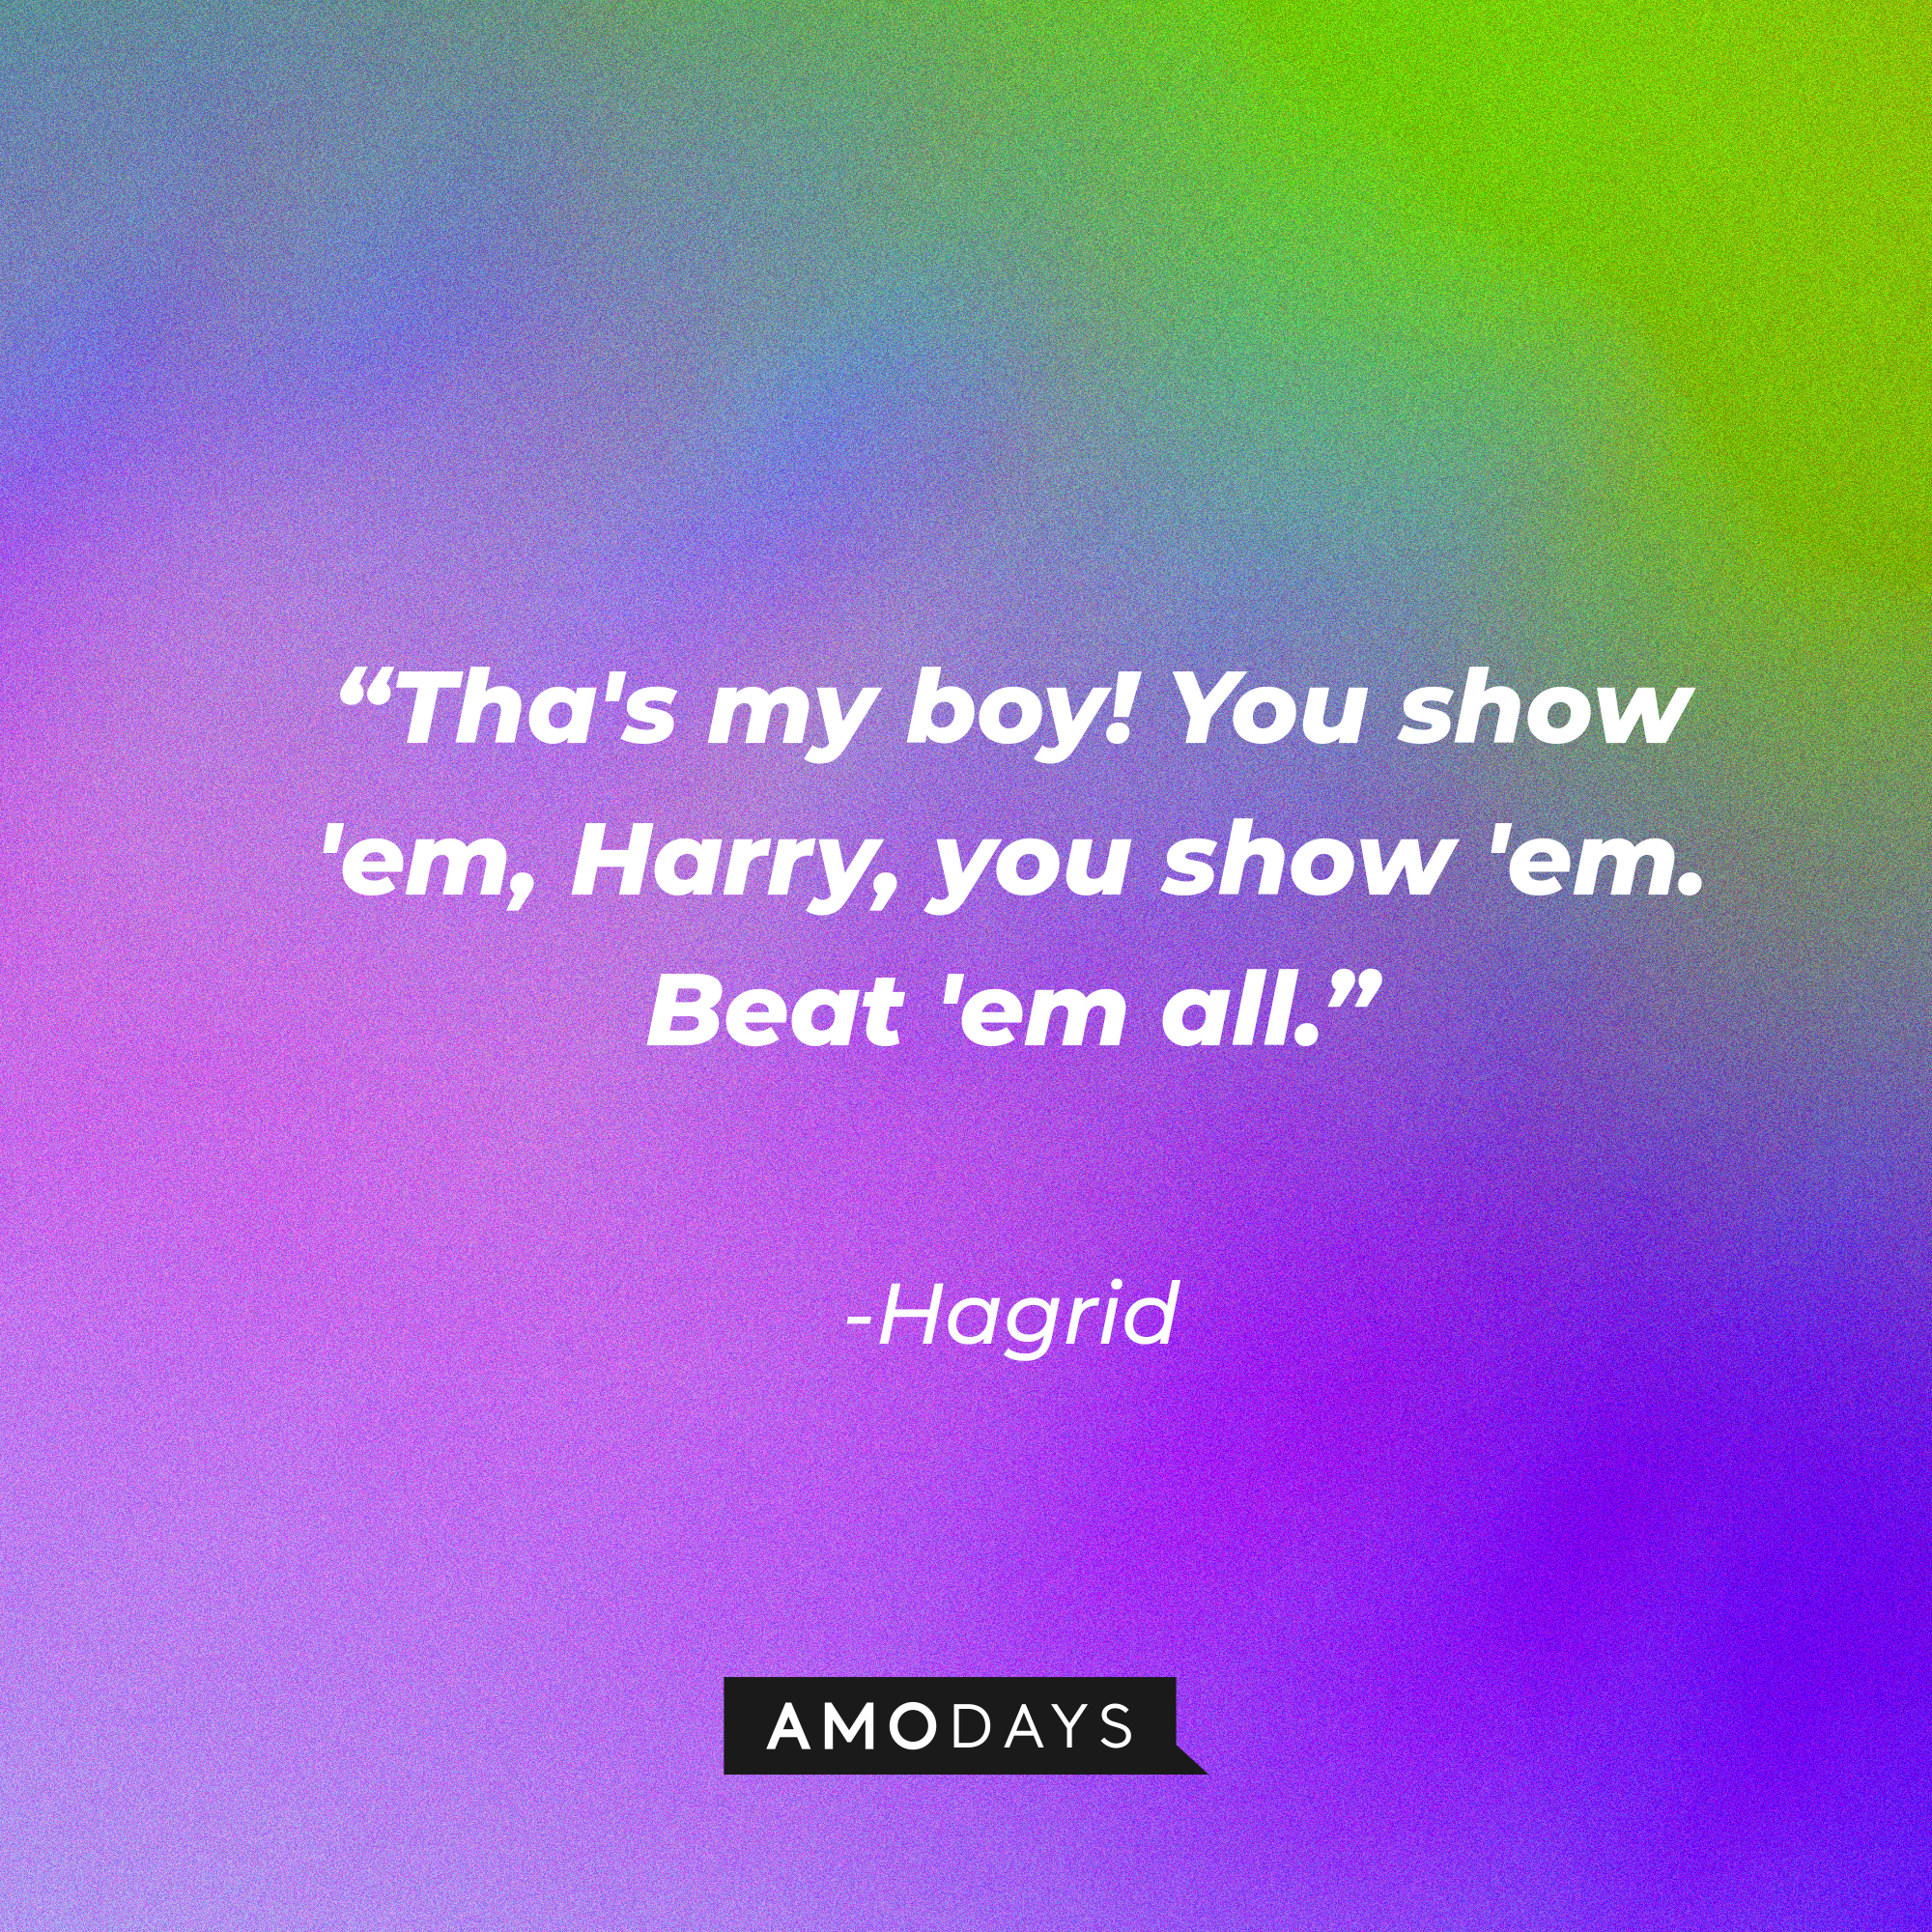 Hagrid's quote: "Tha's my boy! You show 'em, Harry, you show 'em. Beat 'em all." | Source: AmoDays